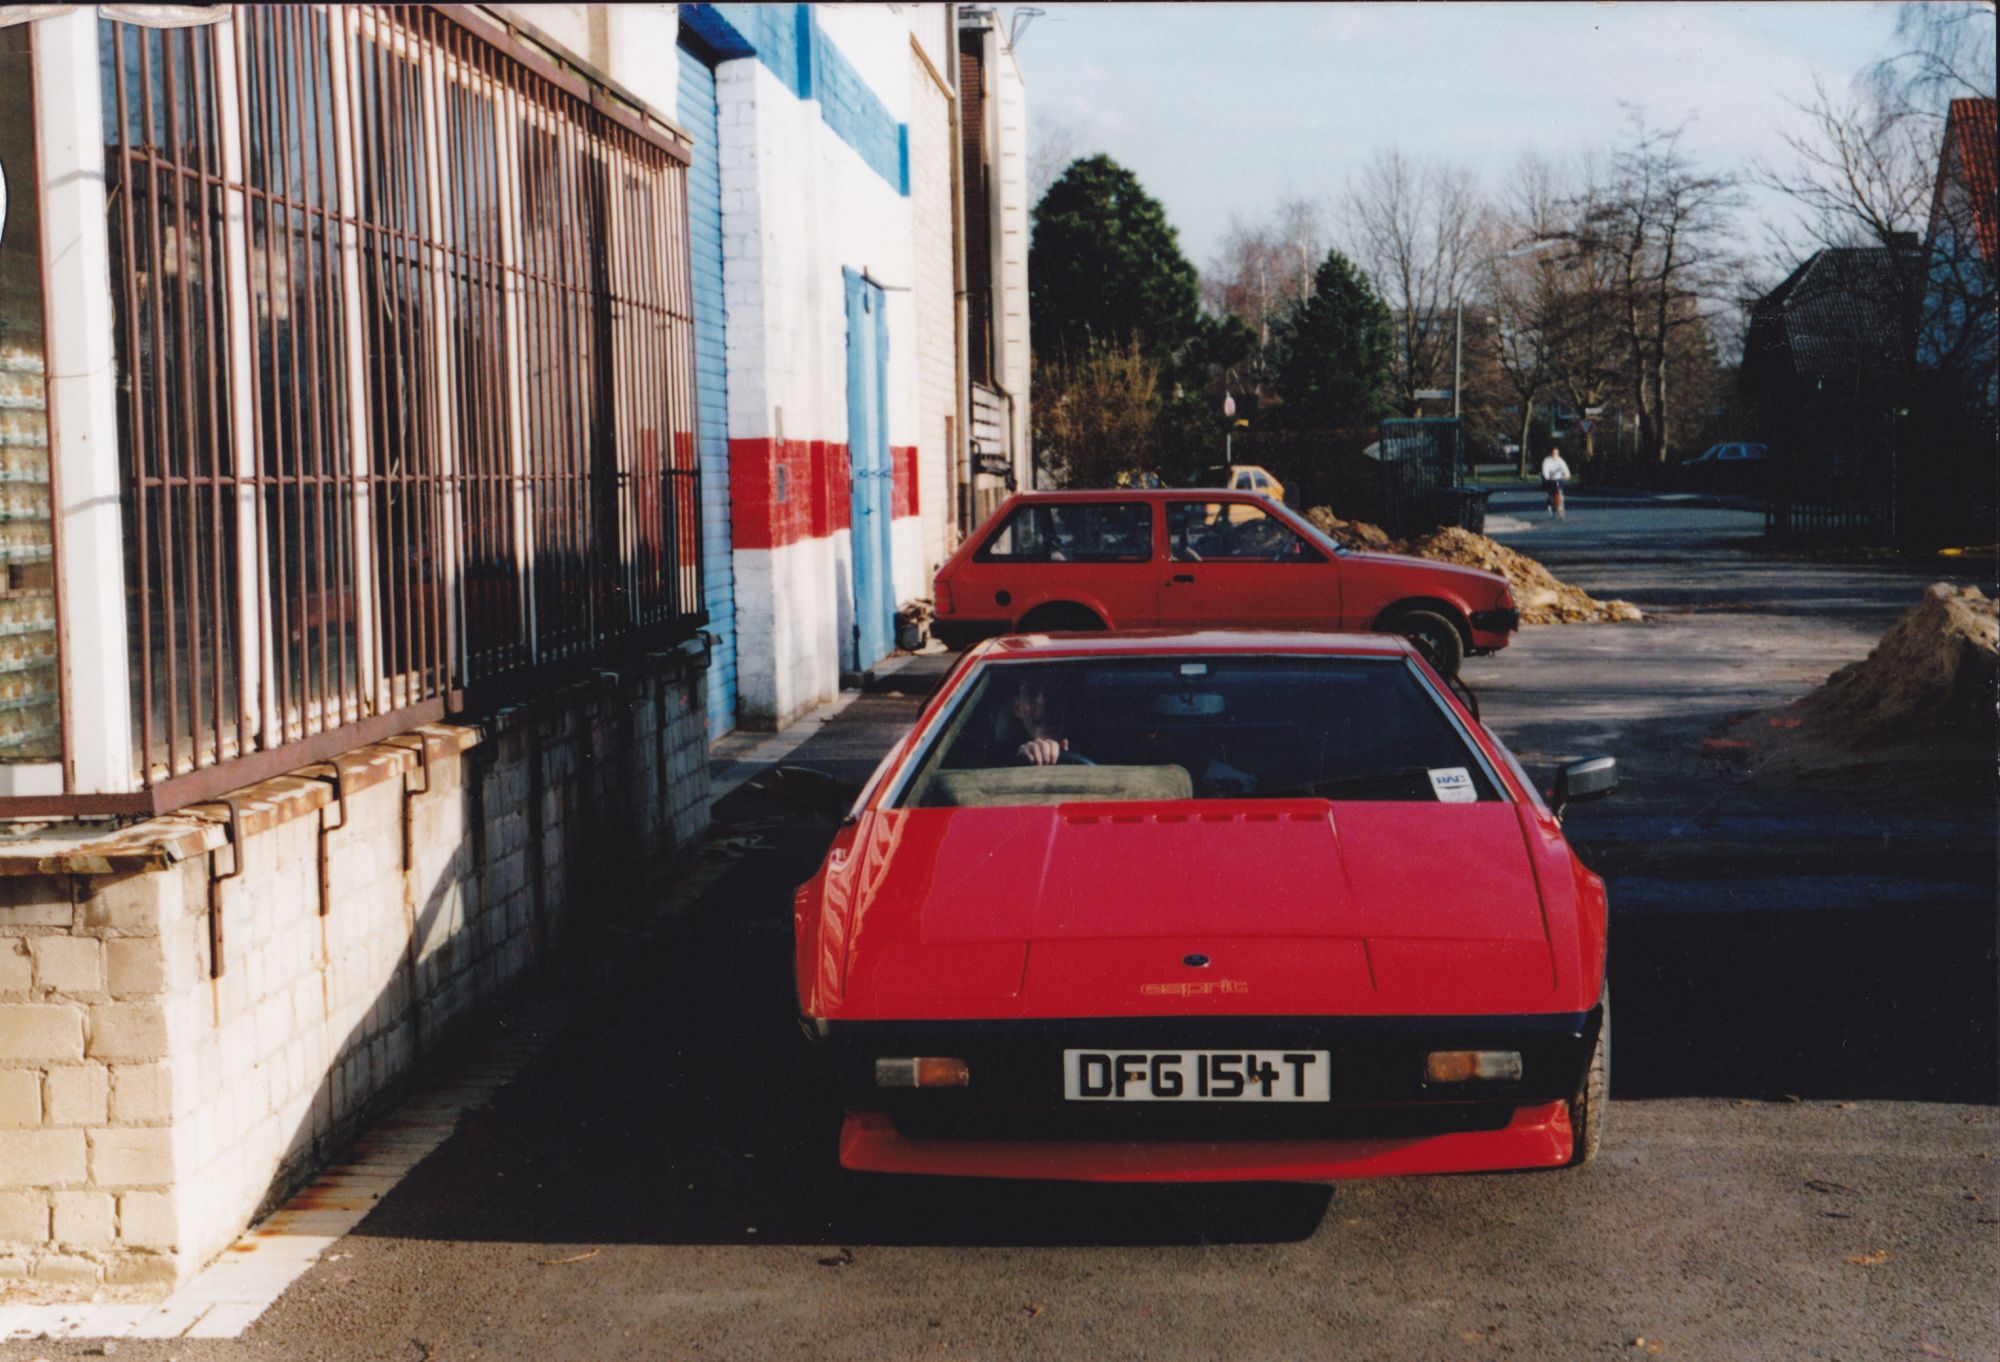 My old Esprit S2 1978